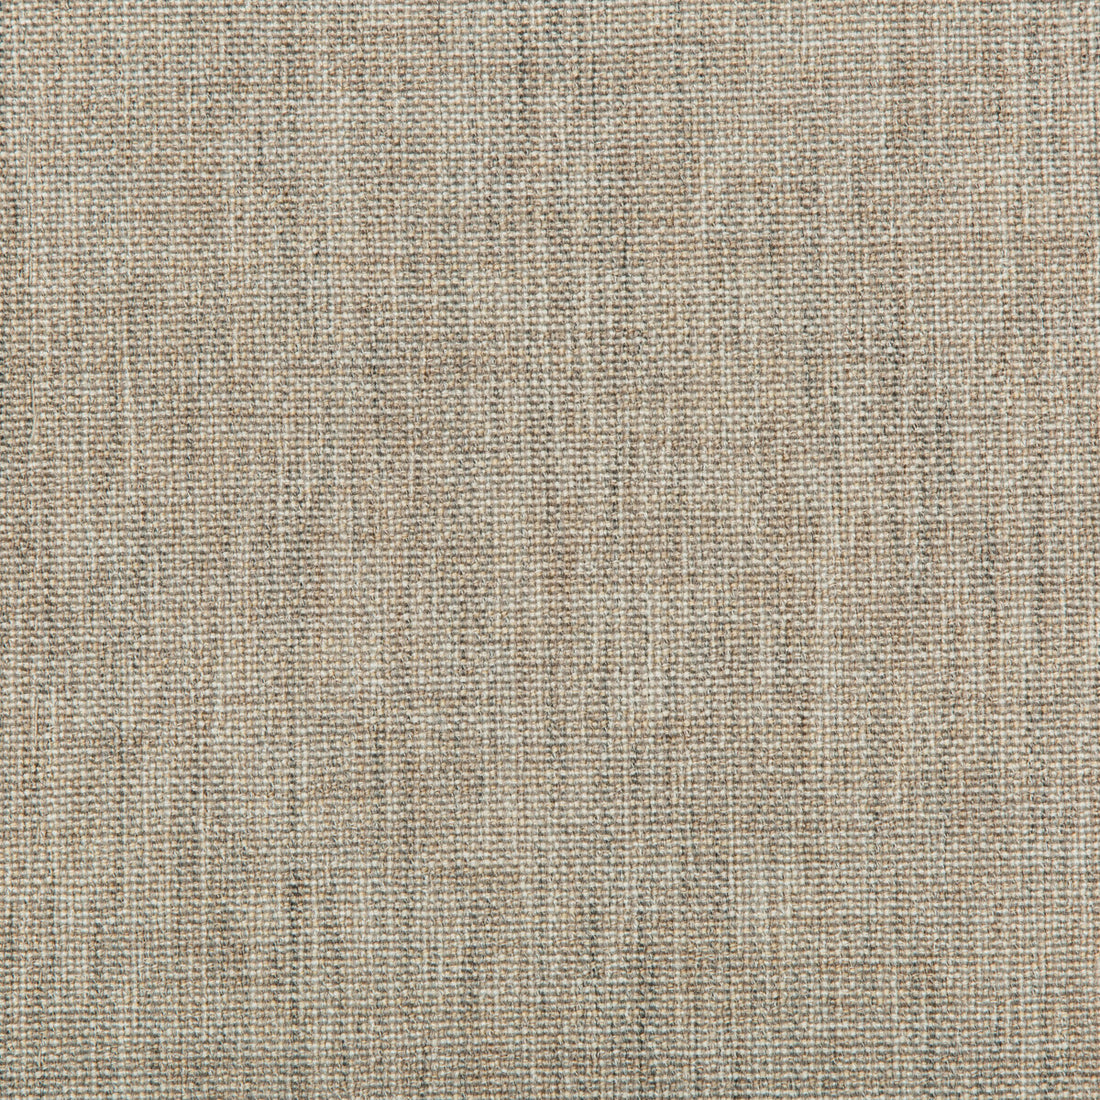 Kravet Smart fabric in 32959-11 color - pattern 32959.11.0 - by Kravet Smart